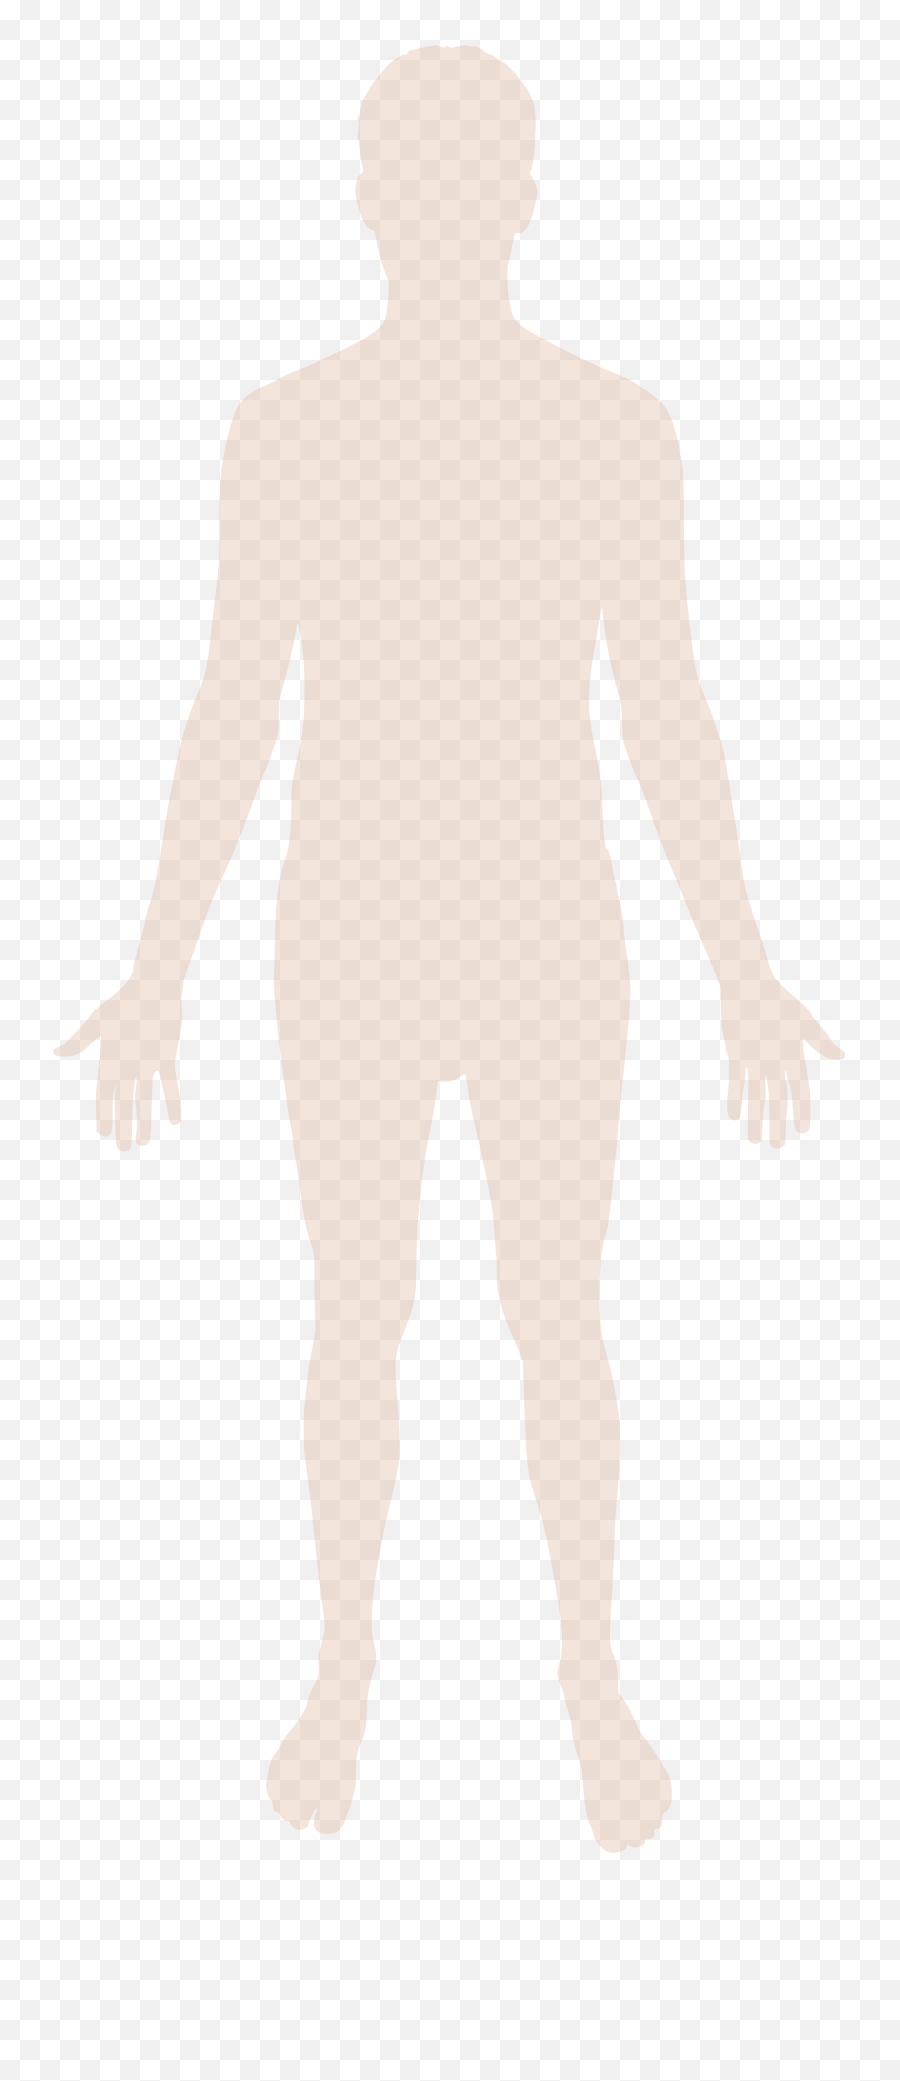 Human Figure Transparent Png Clipart - Human Body Outline Svg,Human Figure Png